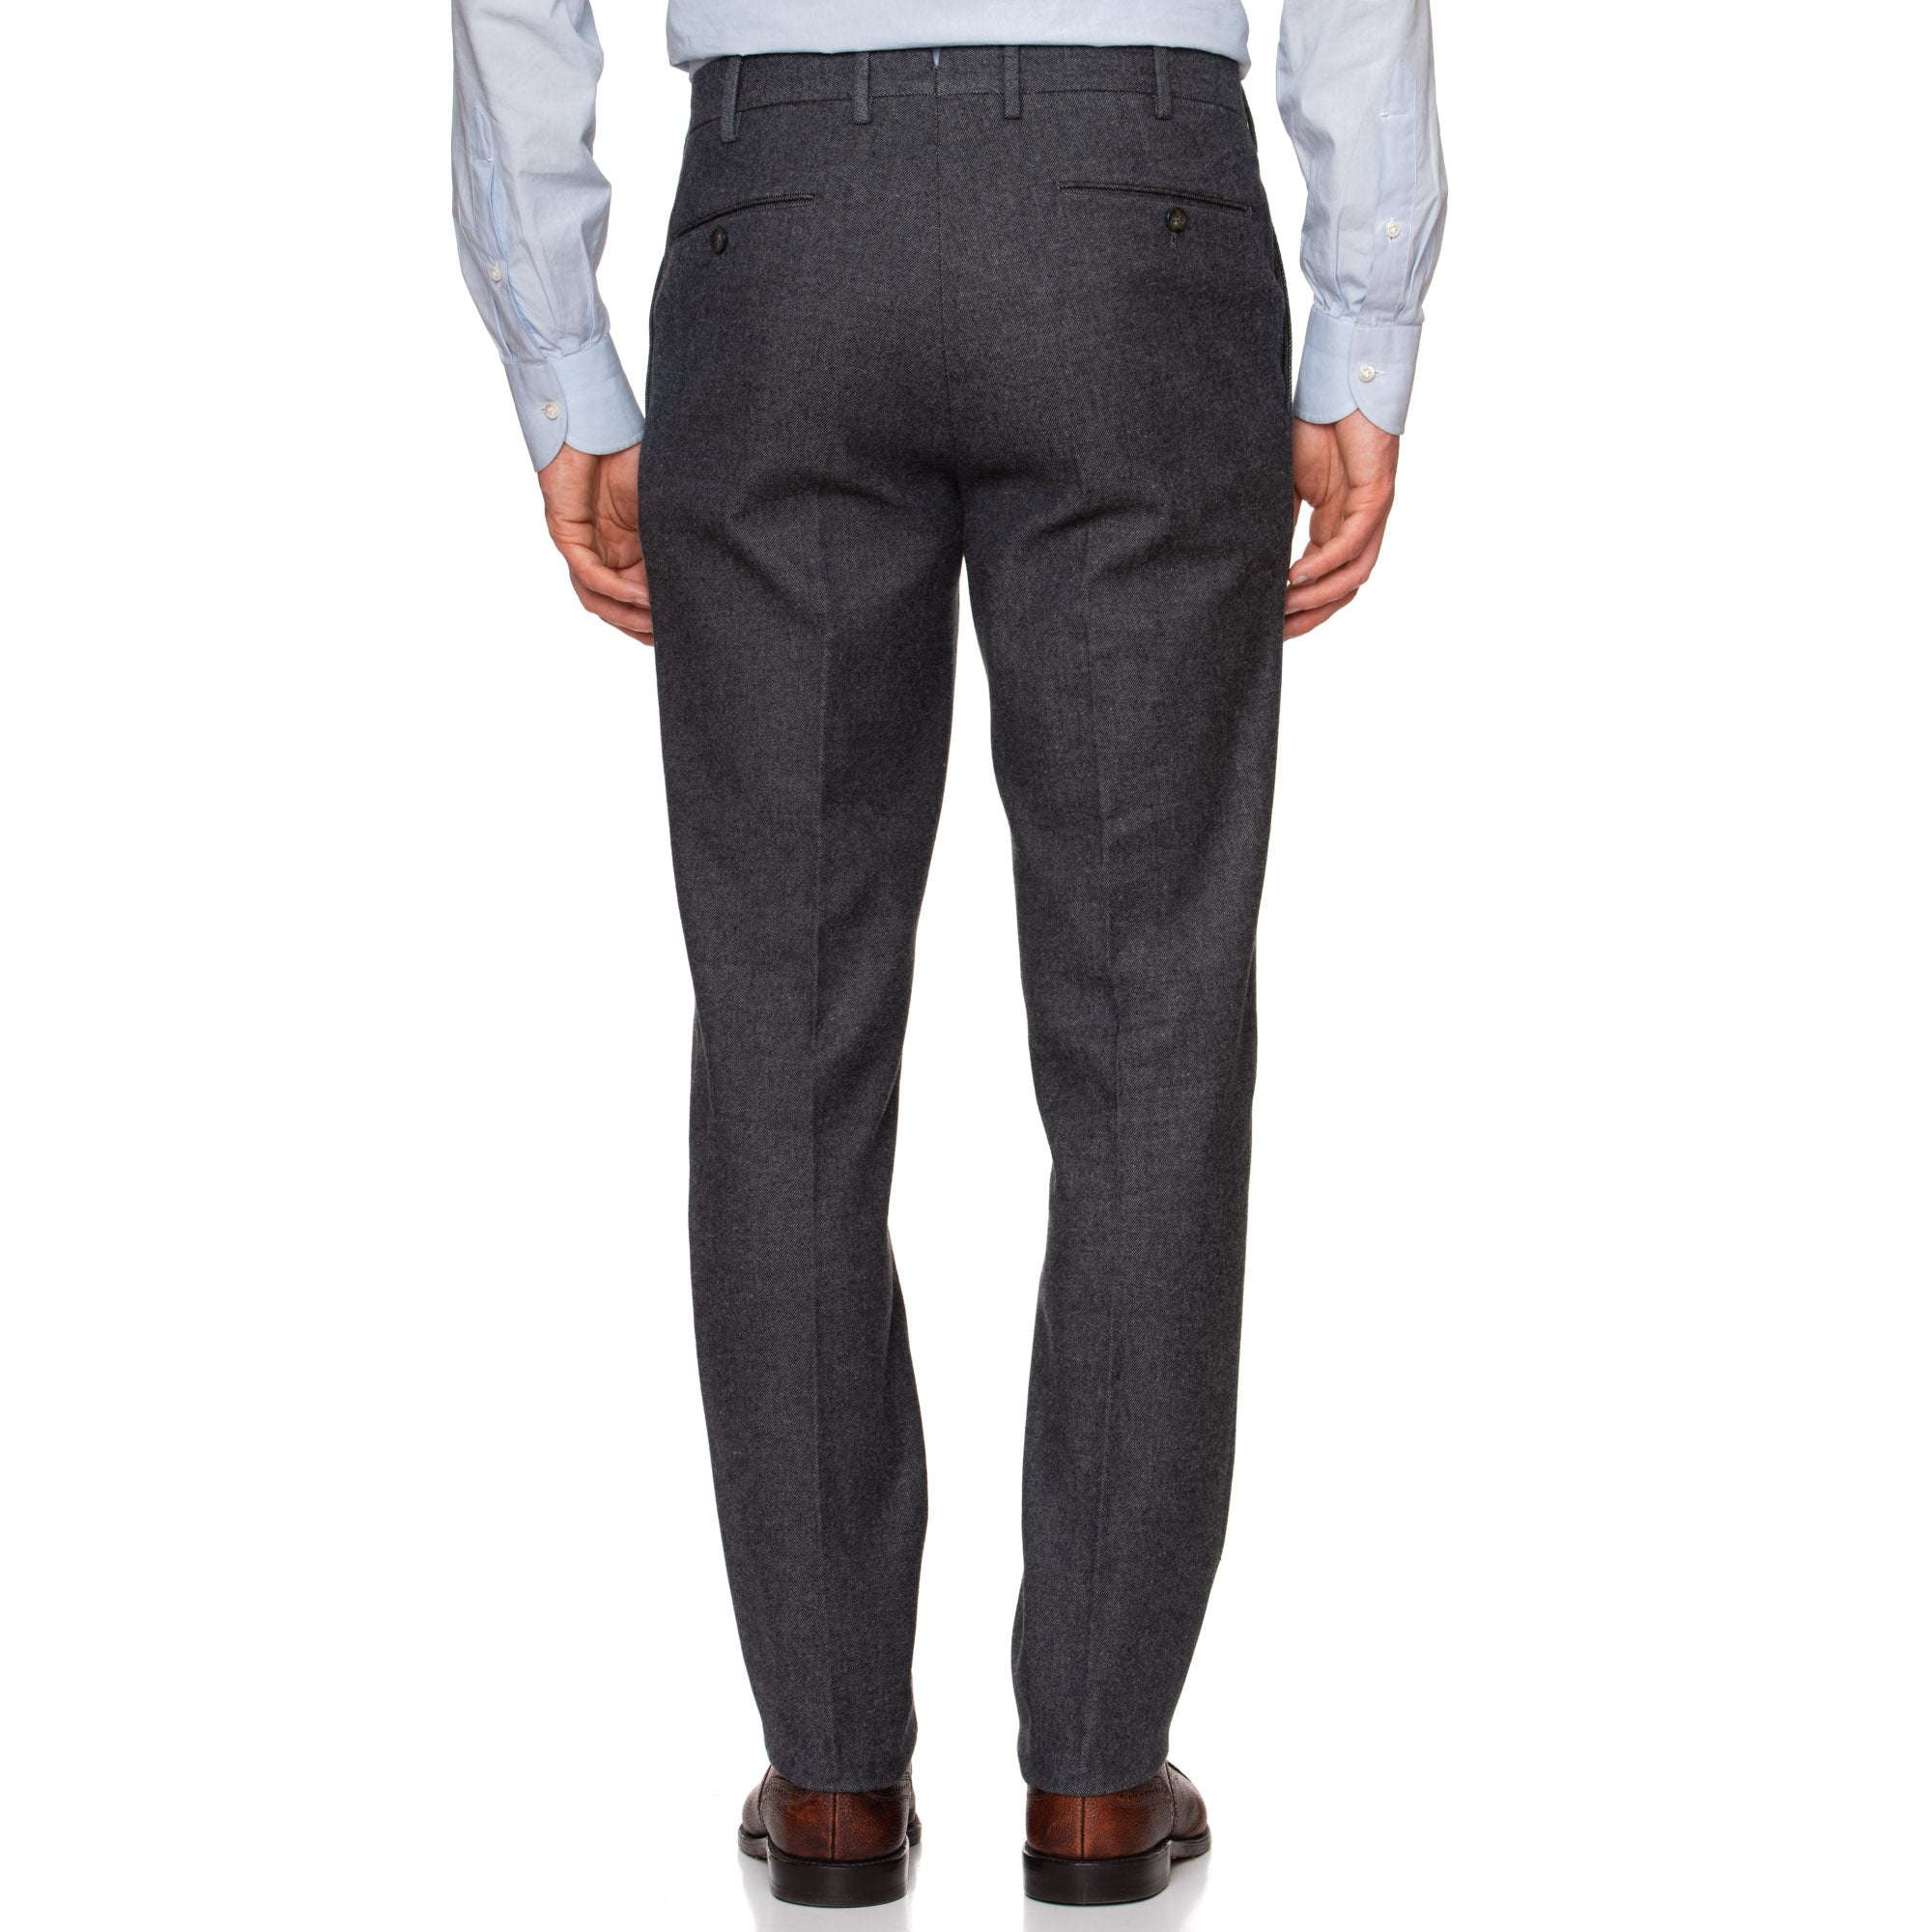 PT01 PANTALONI TORINO "Joseph" Gray Flannel Twill Cotton Flat Front Pants NEW